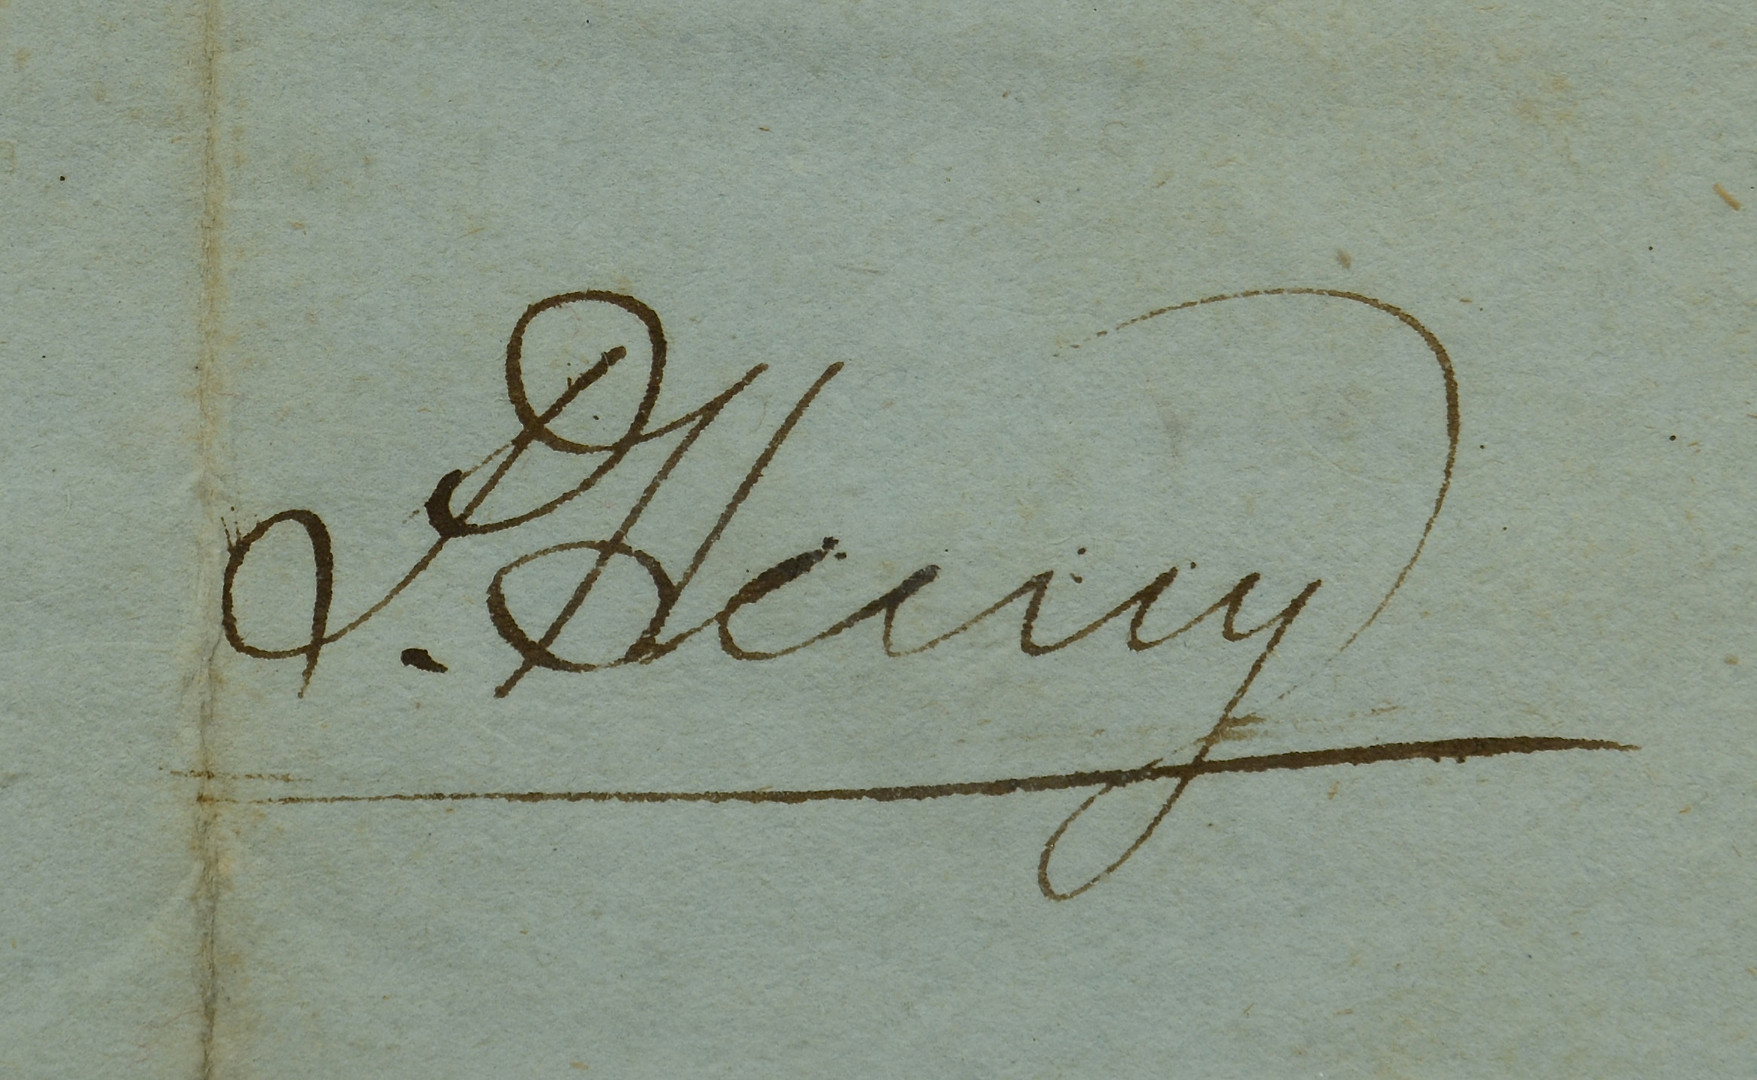 Lot 406: Patrick Henry Signed Land Grant, 1785